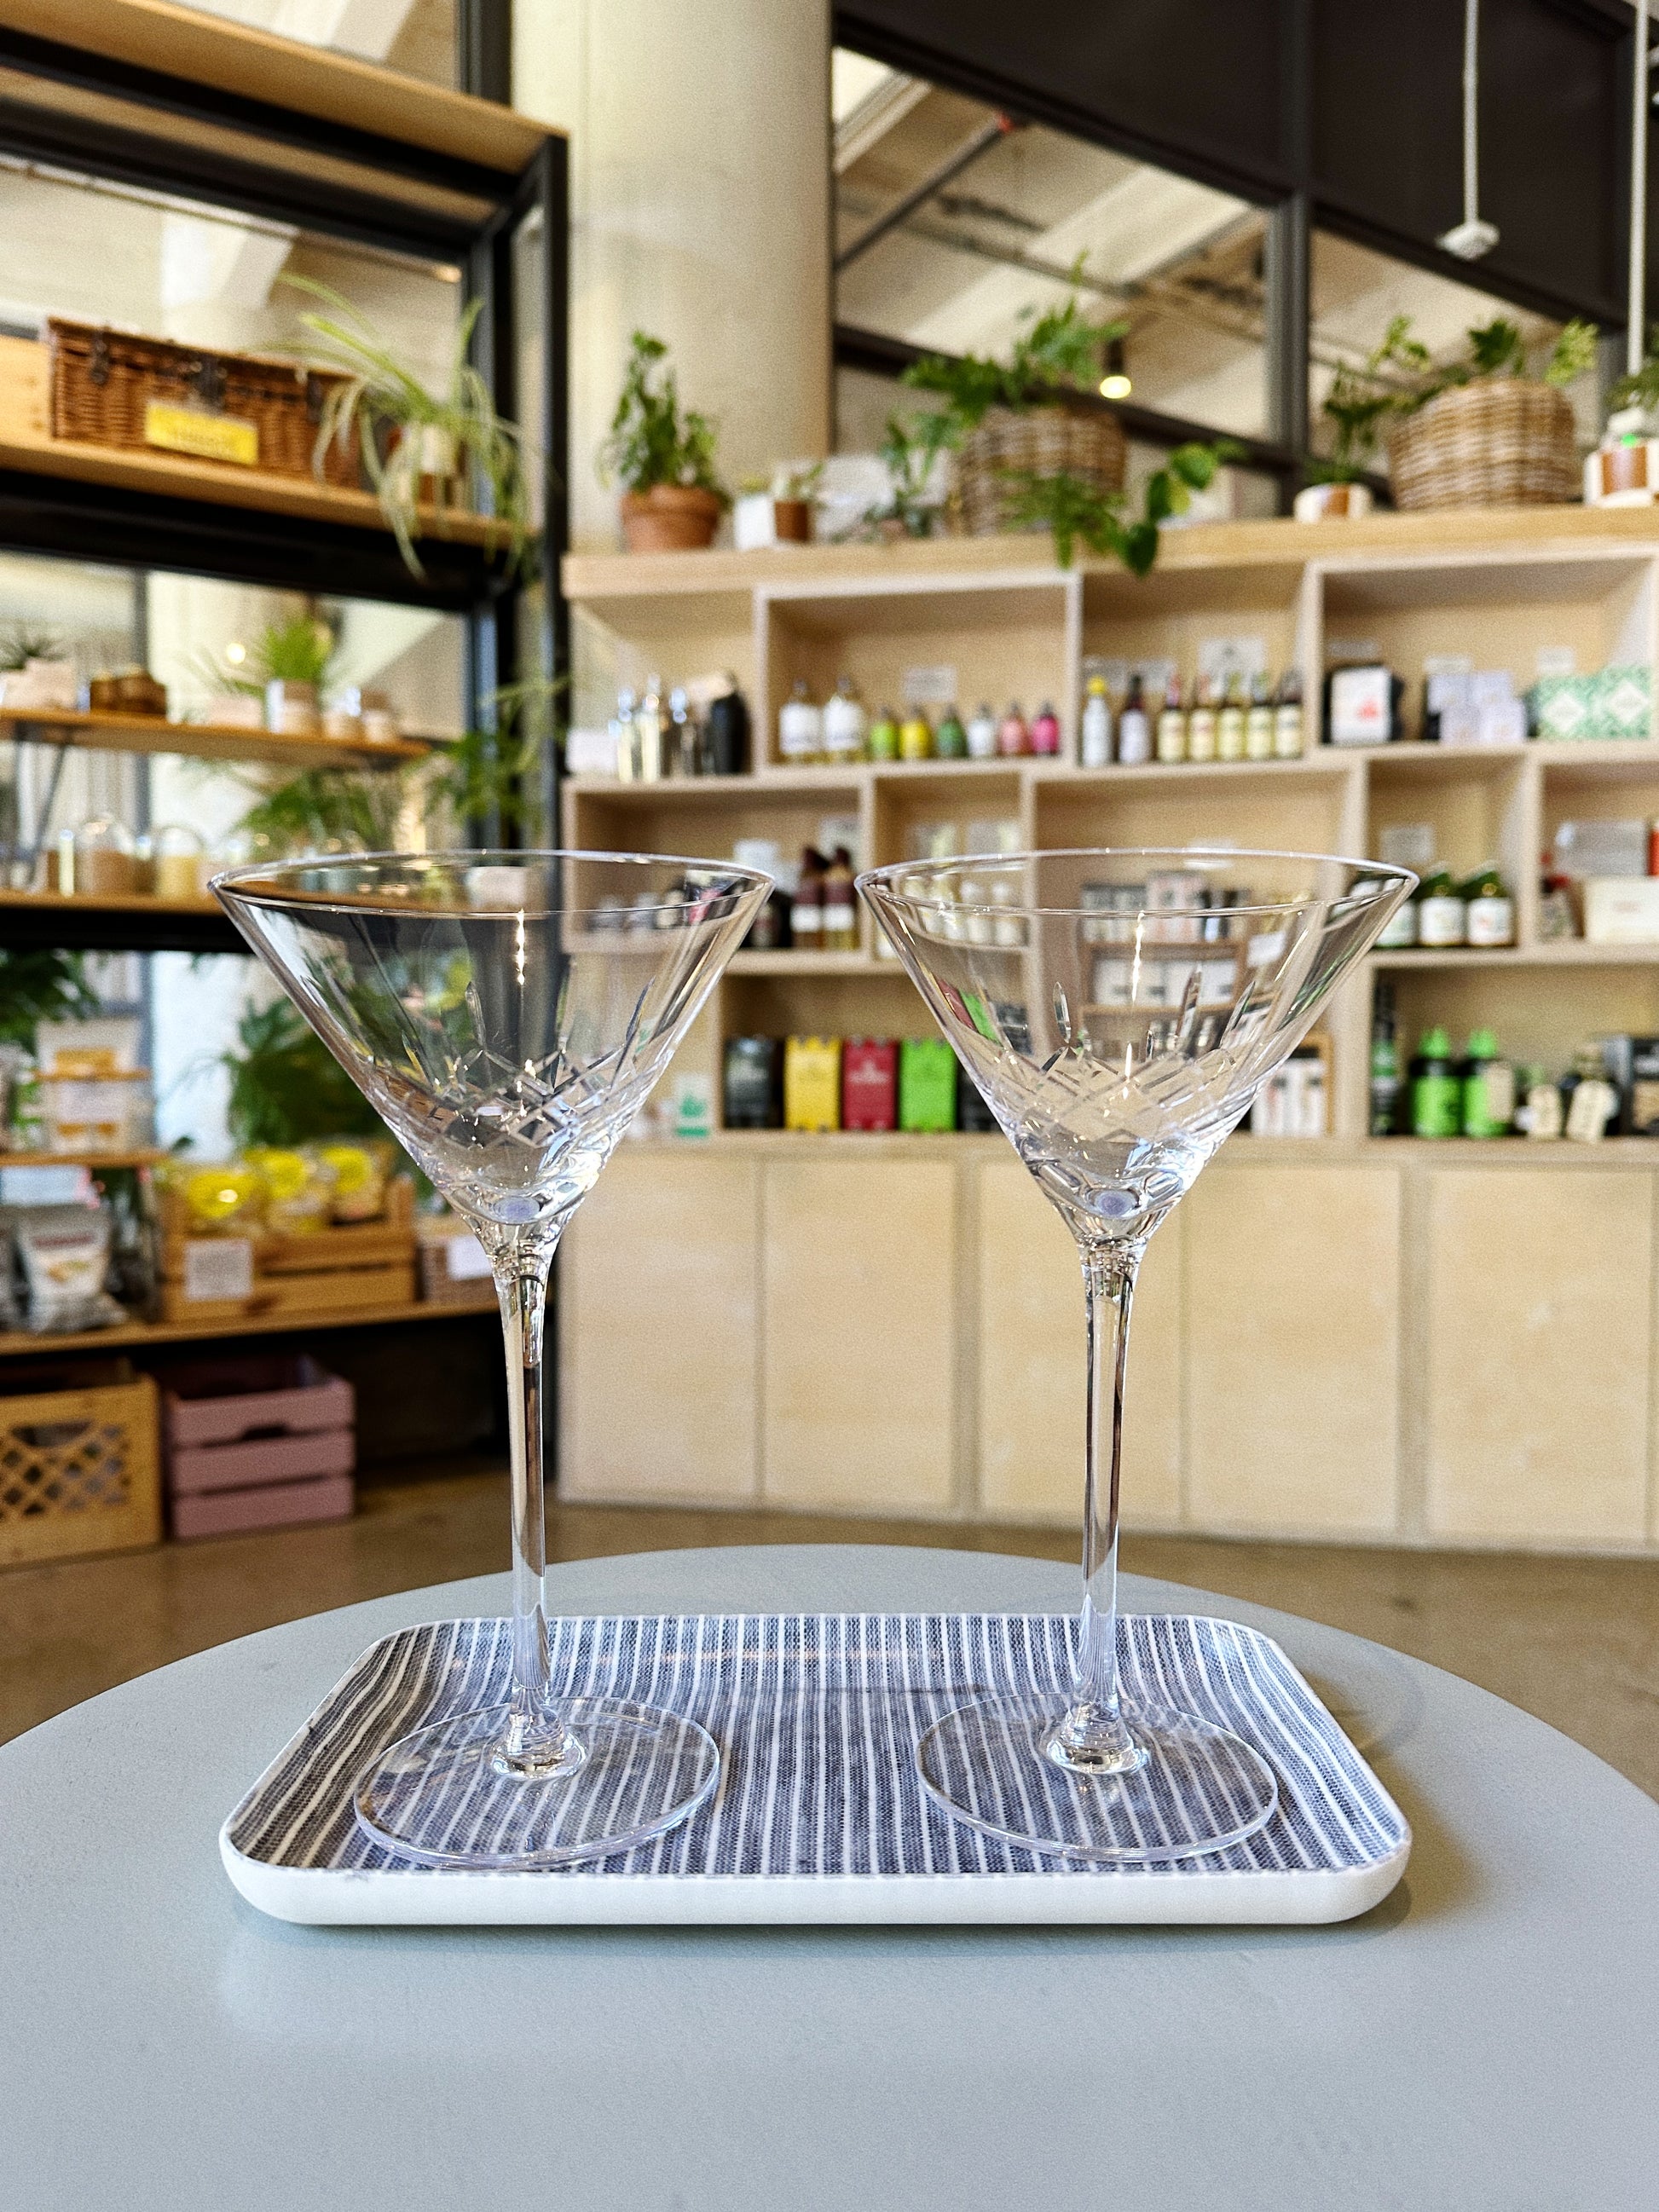 Viski Admiral Etched Martini Glasses, Cocktail Coupe Glasses